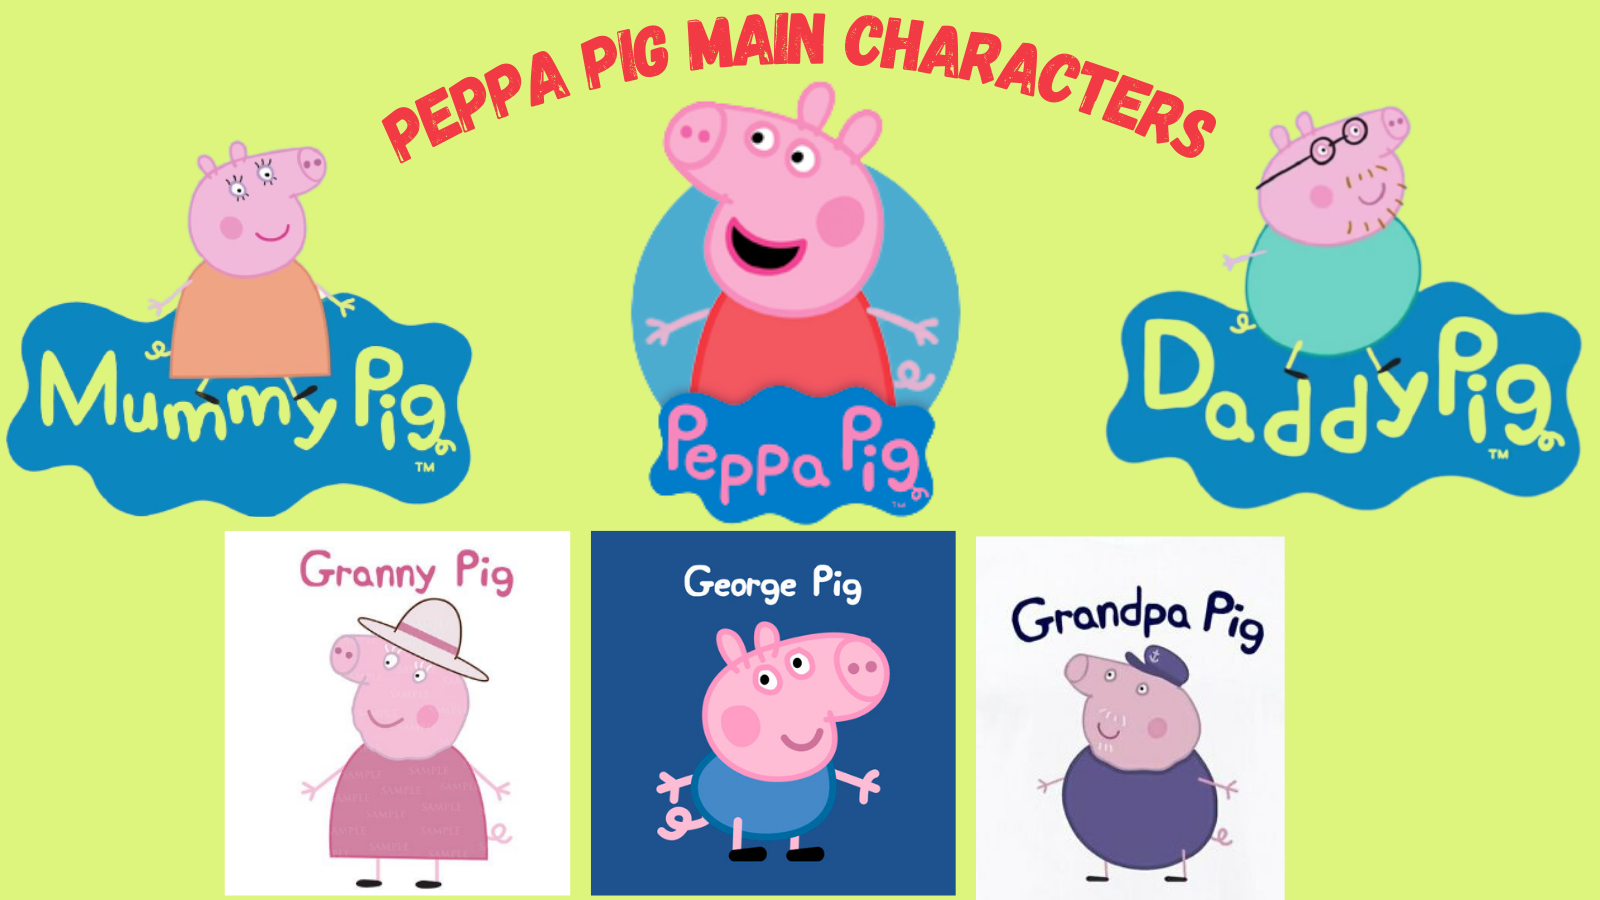 Peppa Pig Main Characters.